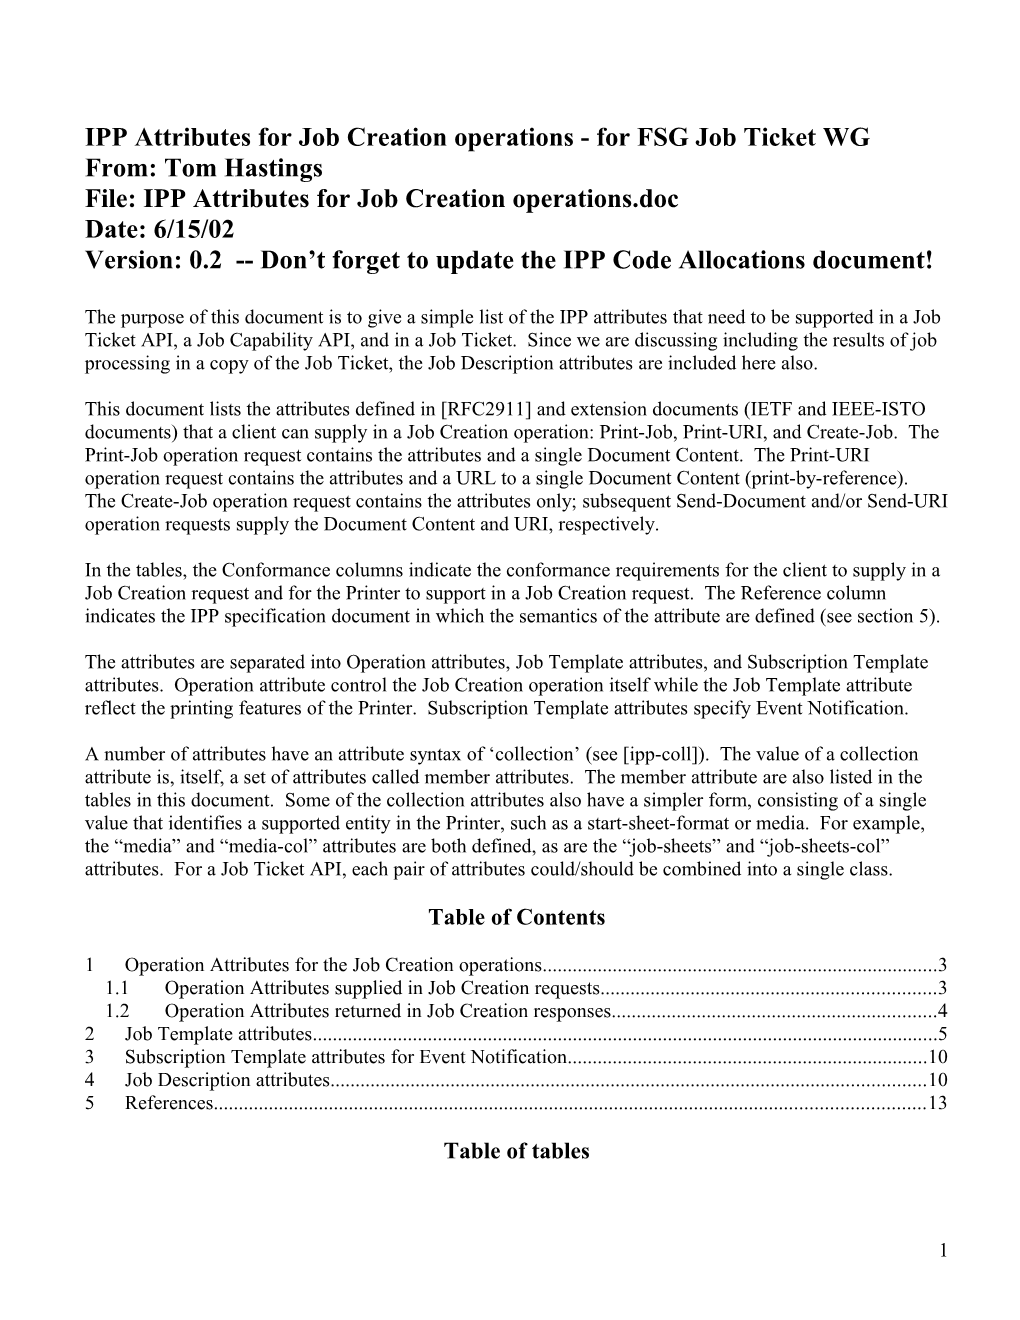 IPP Attributes for Job Creation Operations - for FSG Job Ticket WG